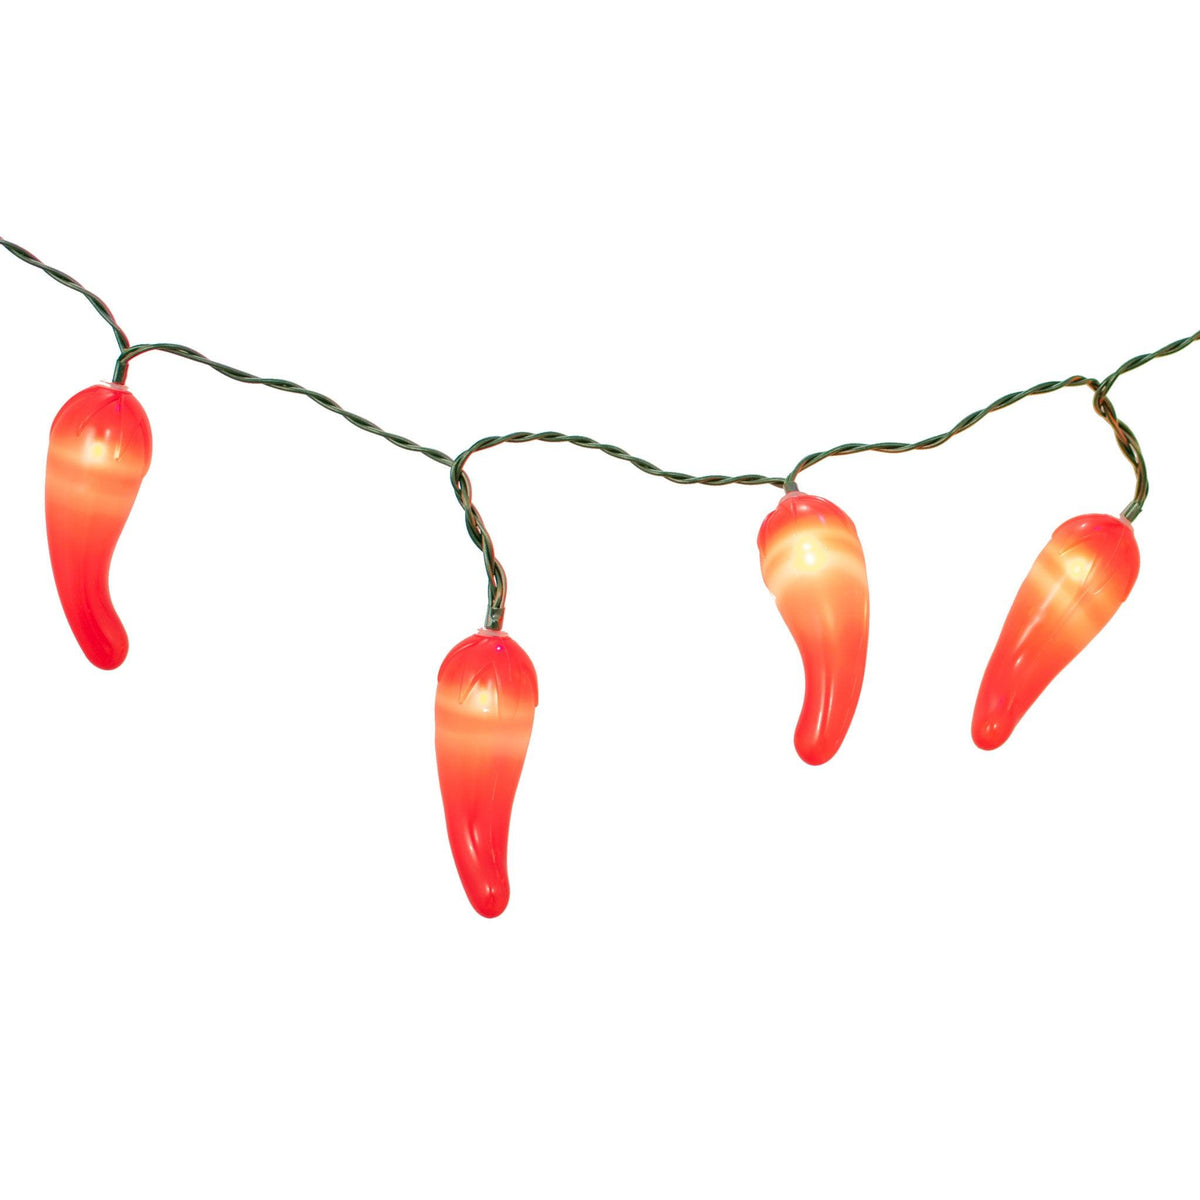 Lee Display's brand new LED Red Chili Pepper Christmas String Lights on sale at leedisplay.com